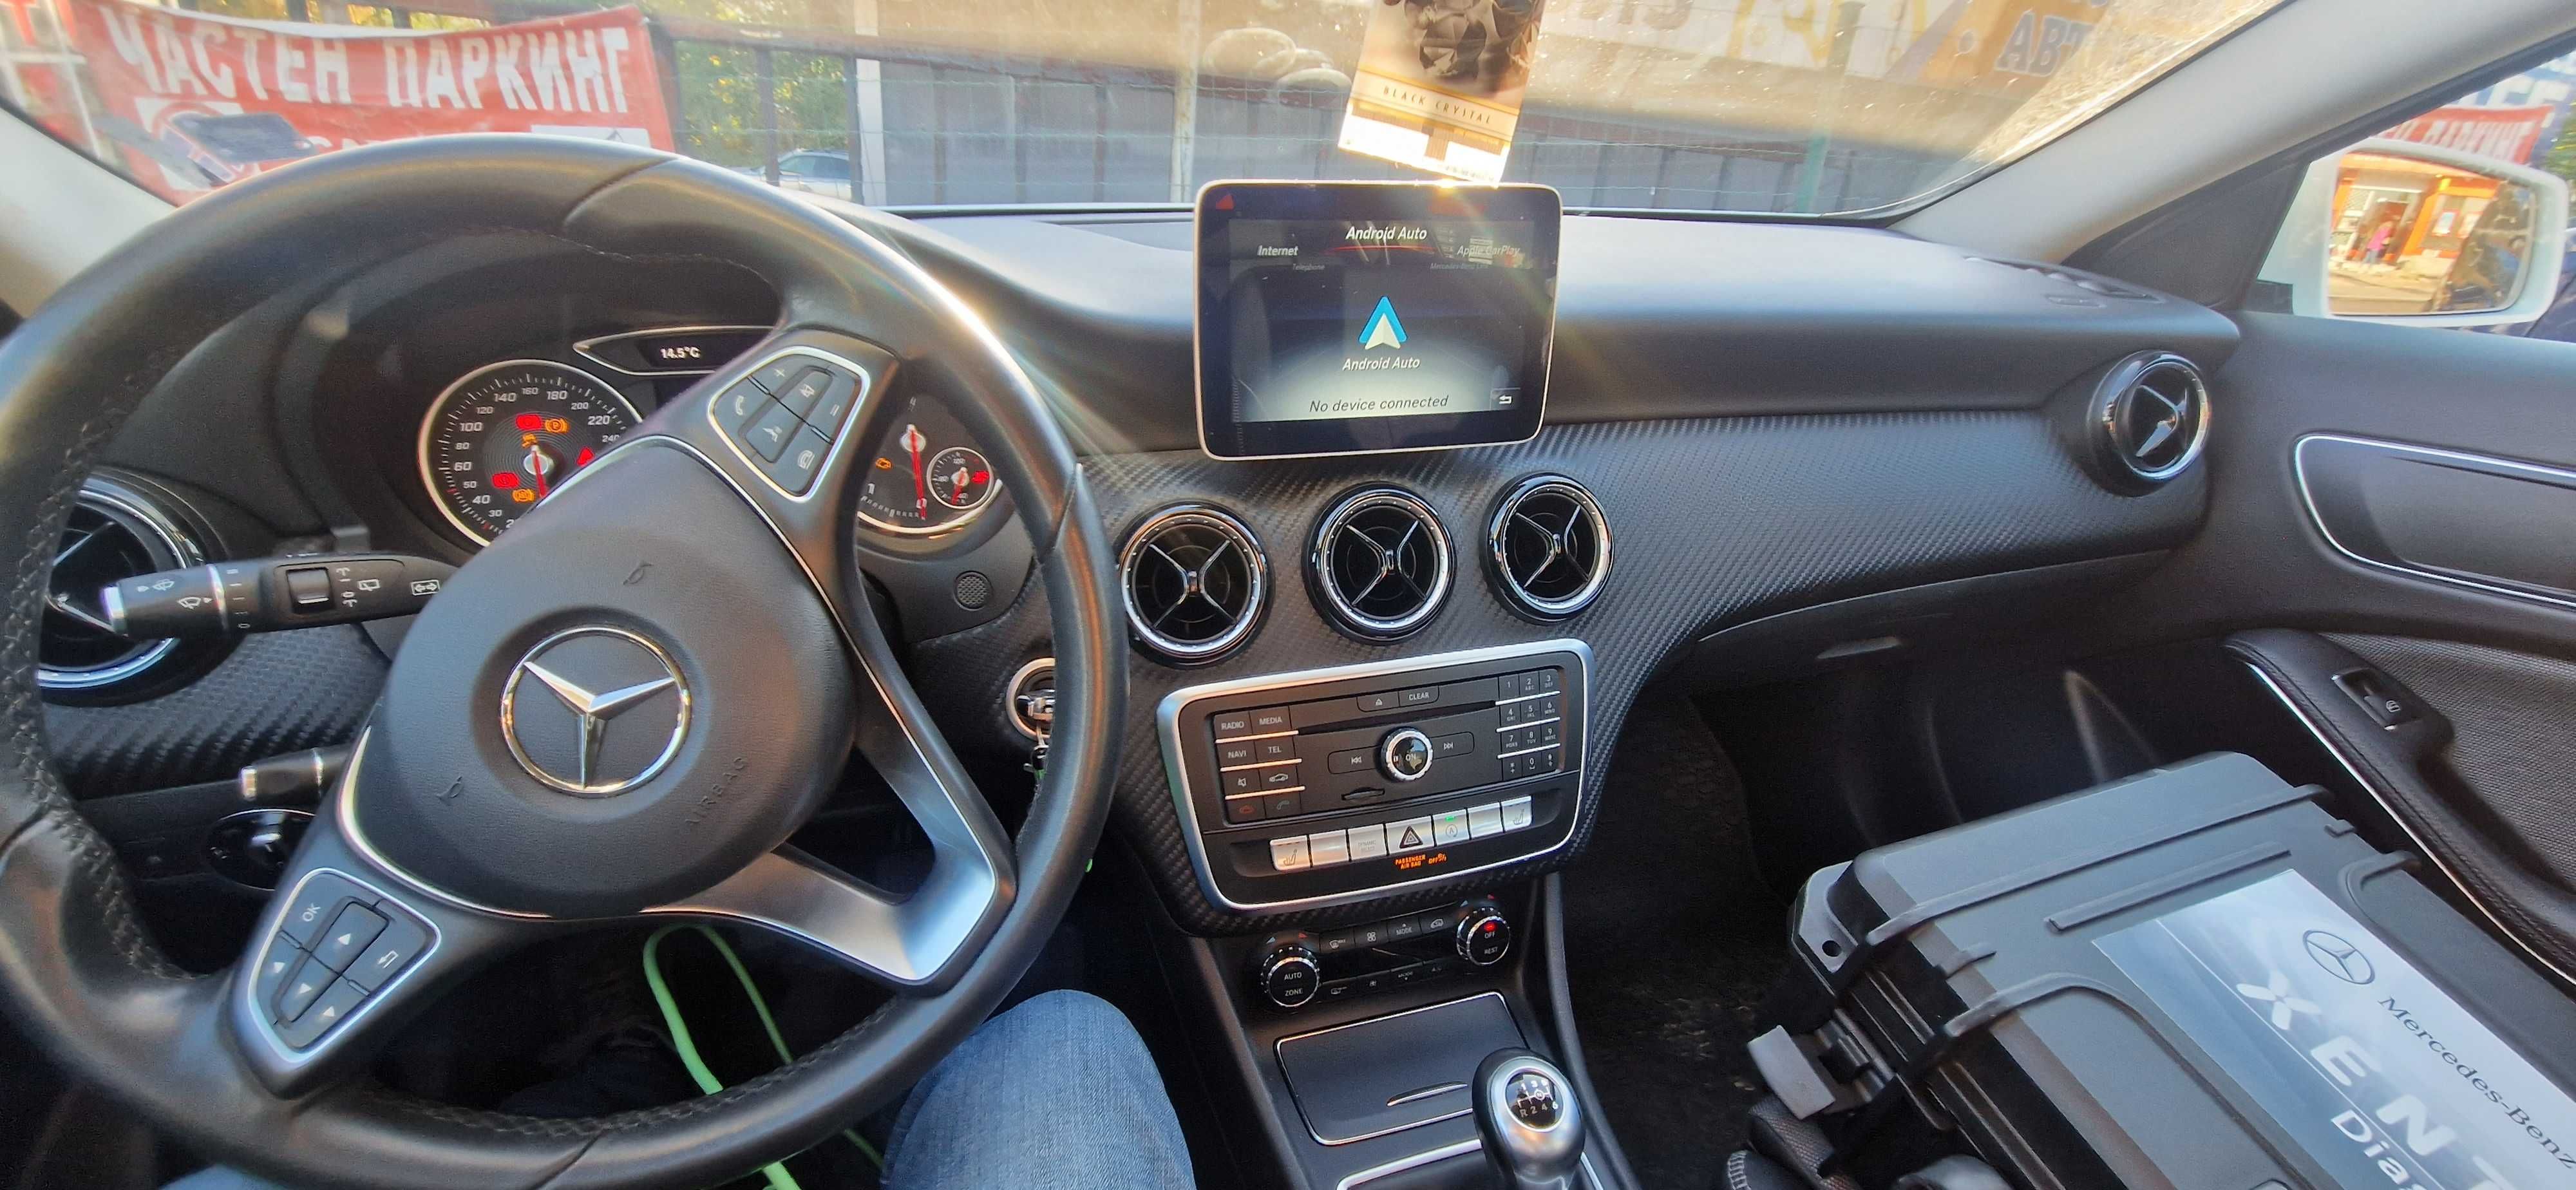 Активиране на  Android auto и Apple Car play за Mercedes benz гр.София